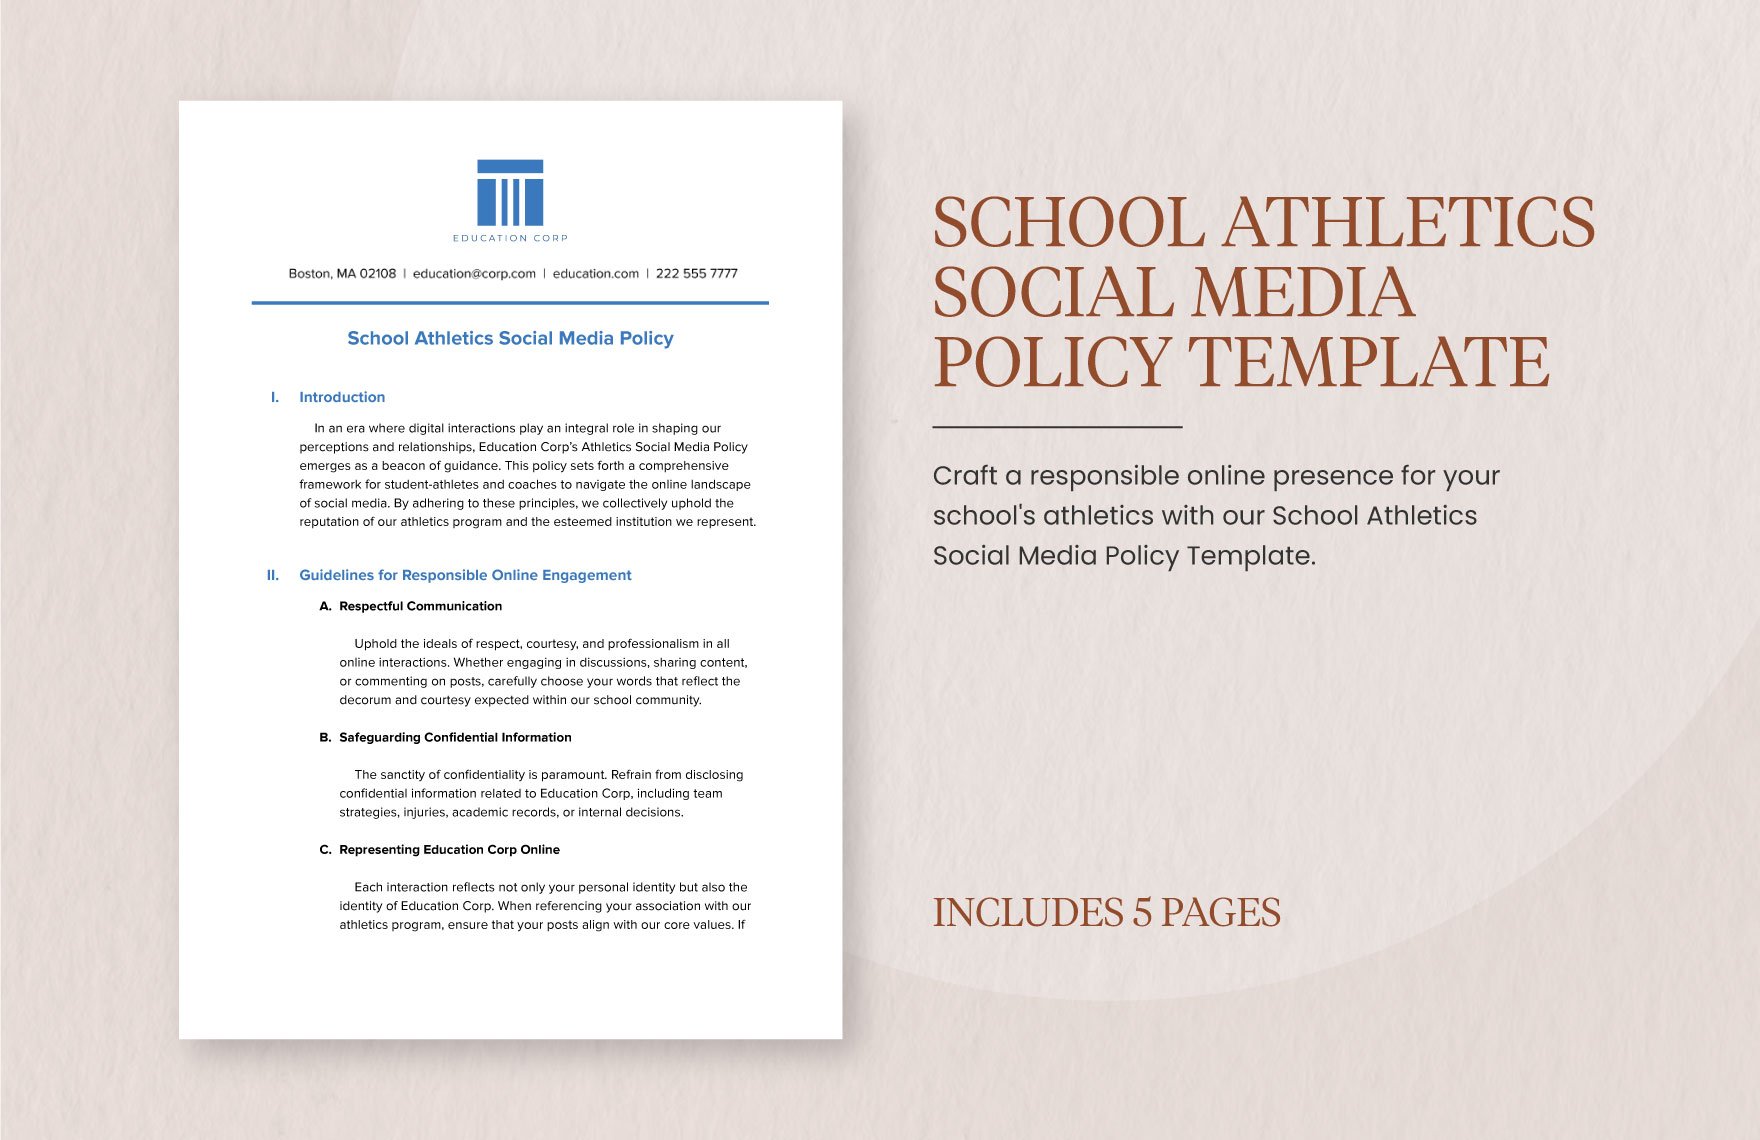 School Athletics Social Media Policy Template in Word, Google Docs, PDF